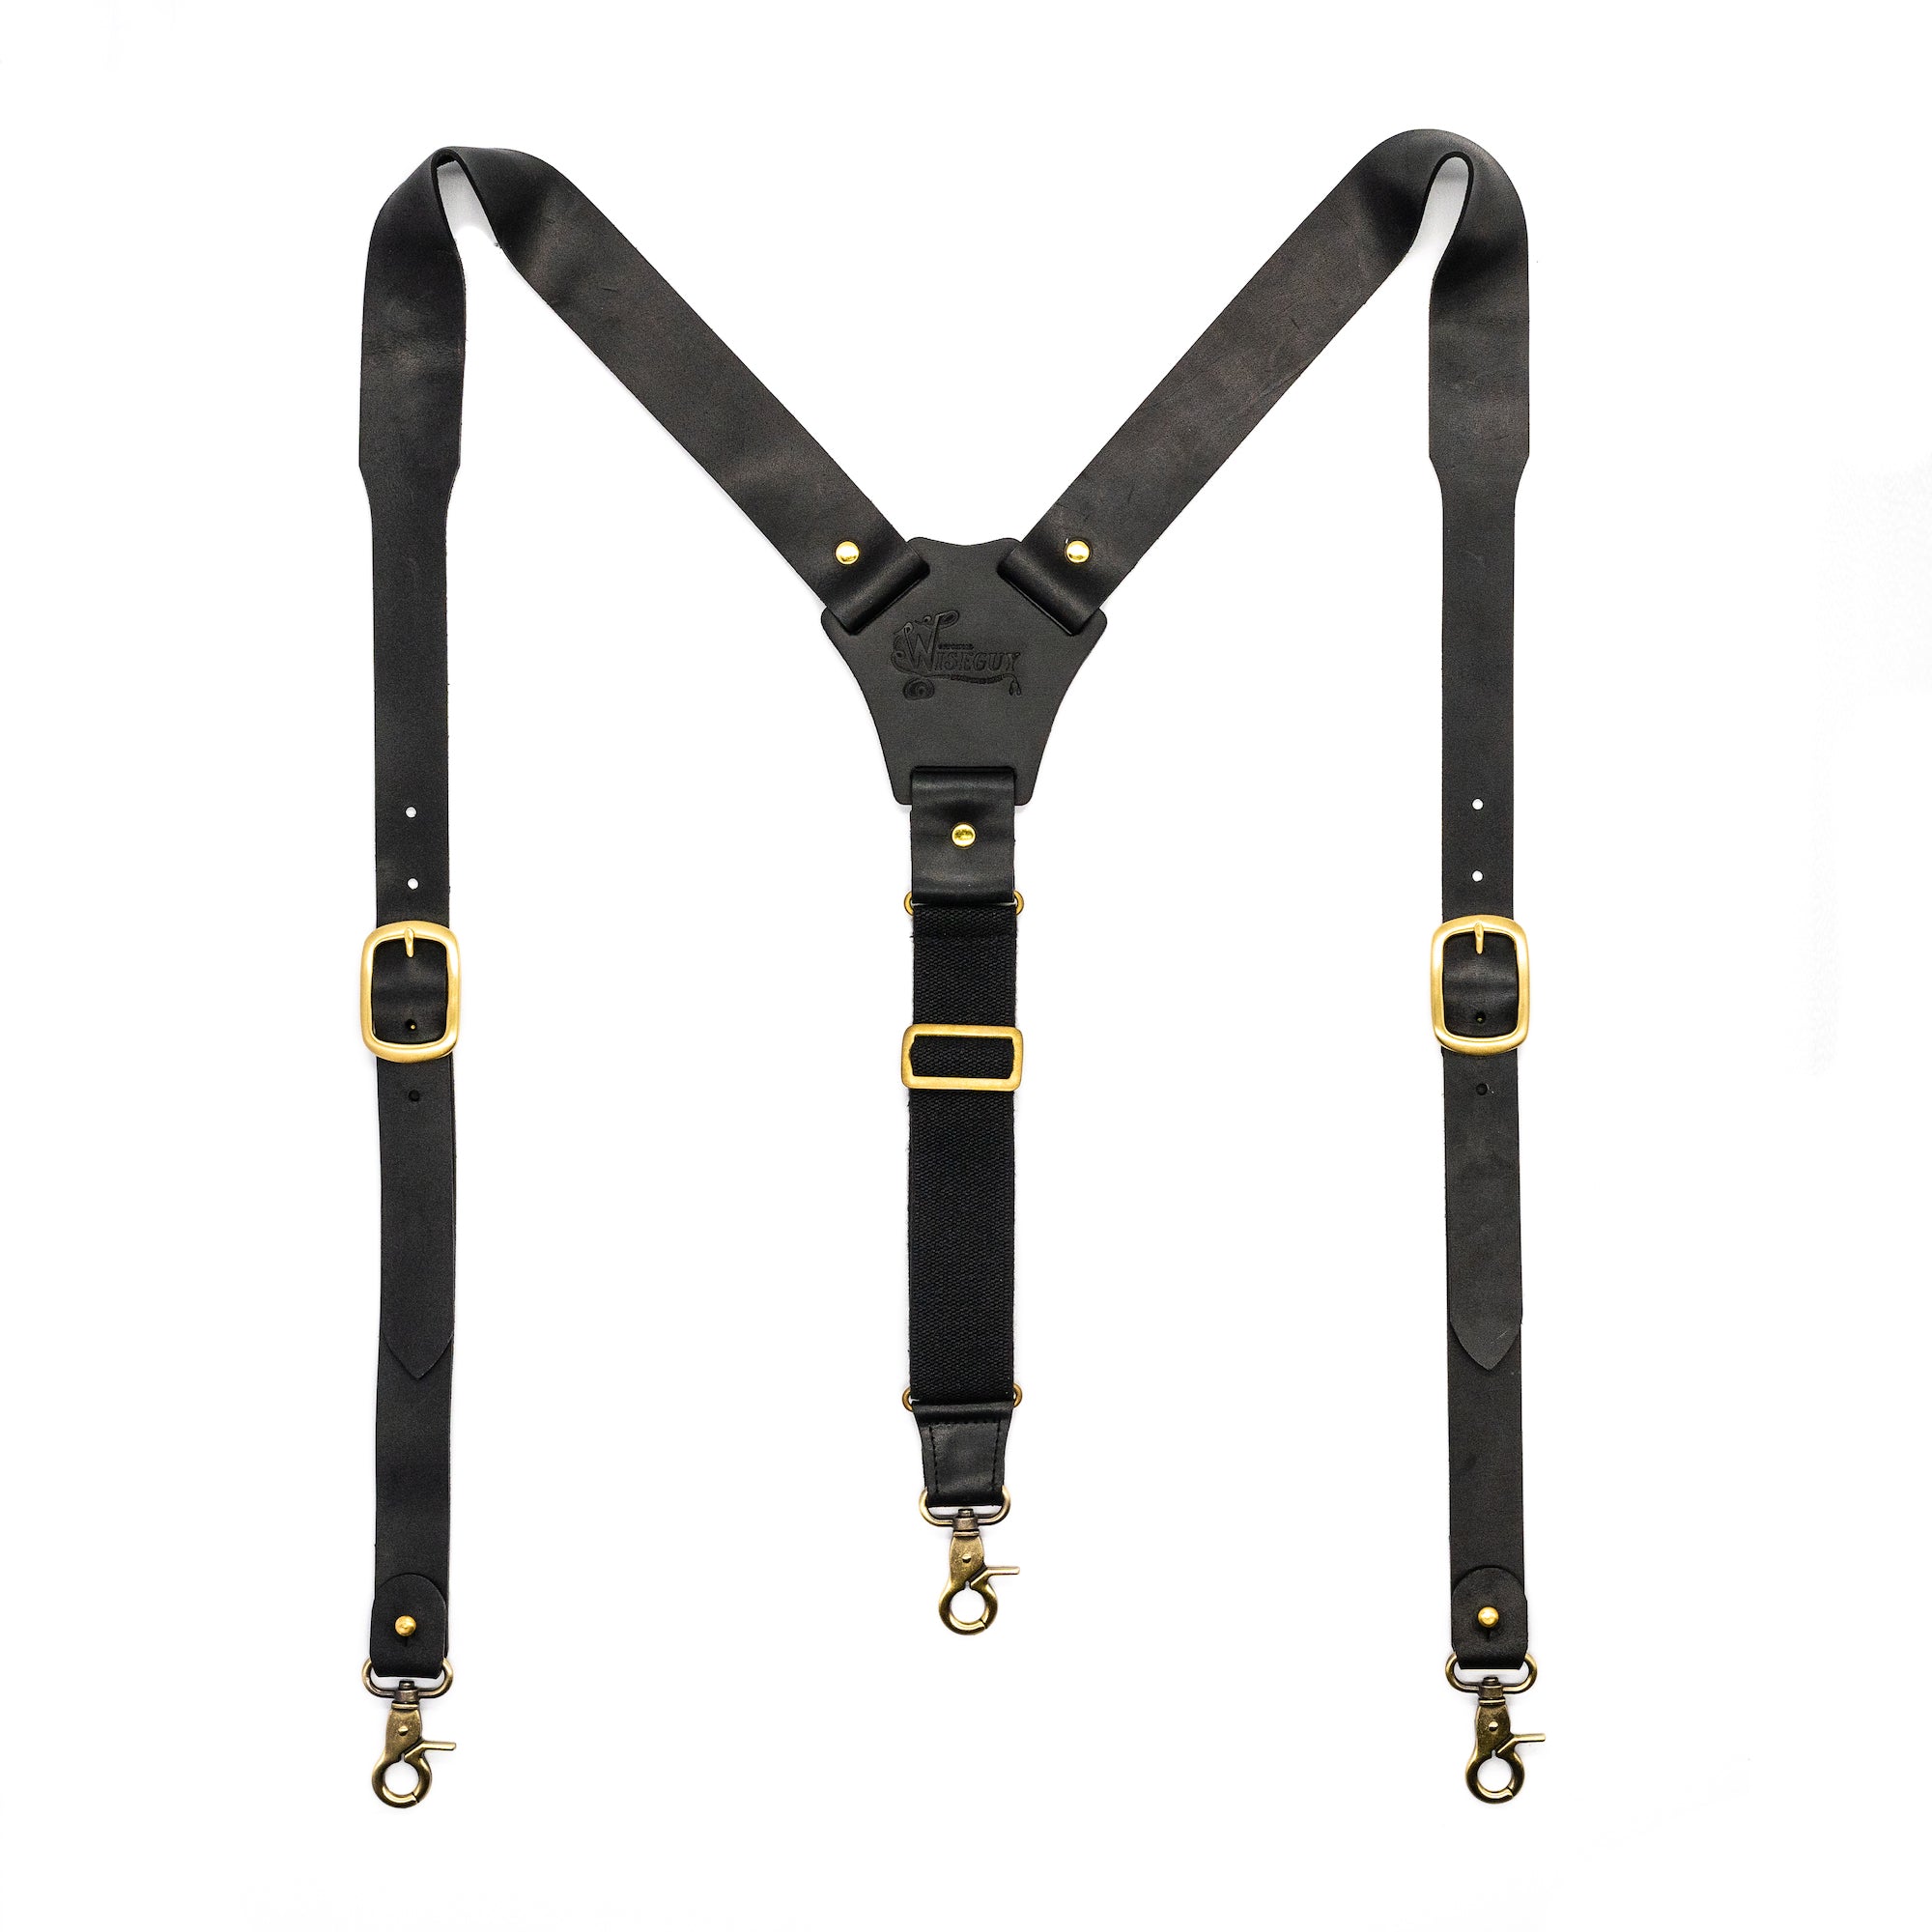 The Hershel Flex Black Wide Suspenders No. L7011